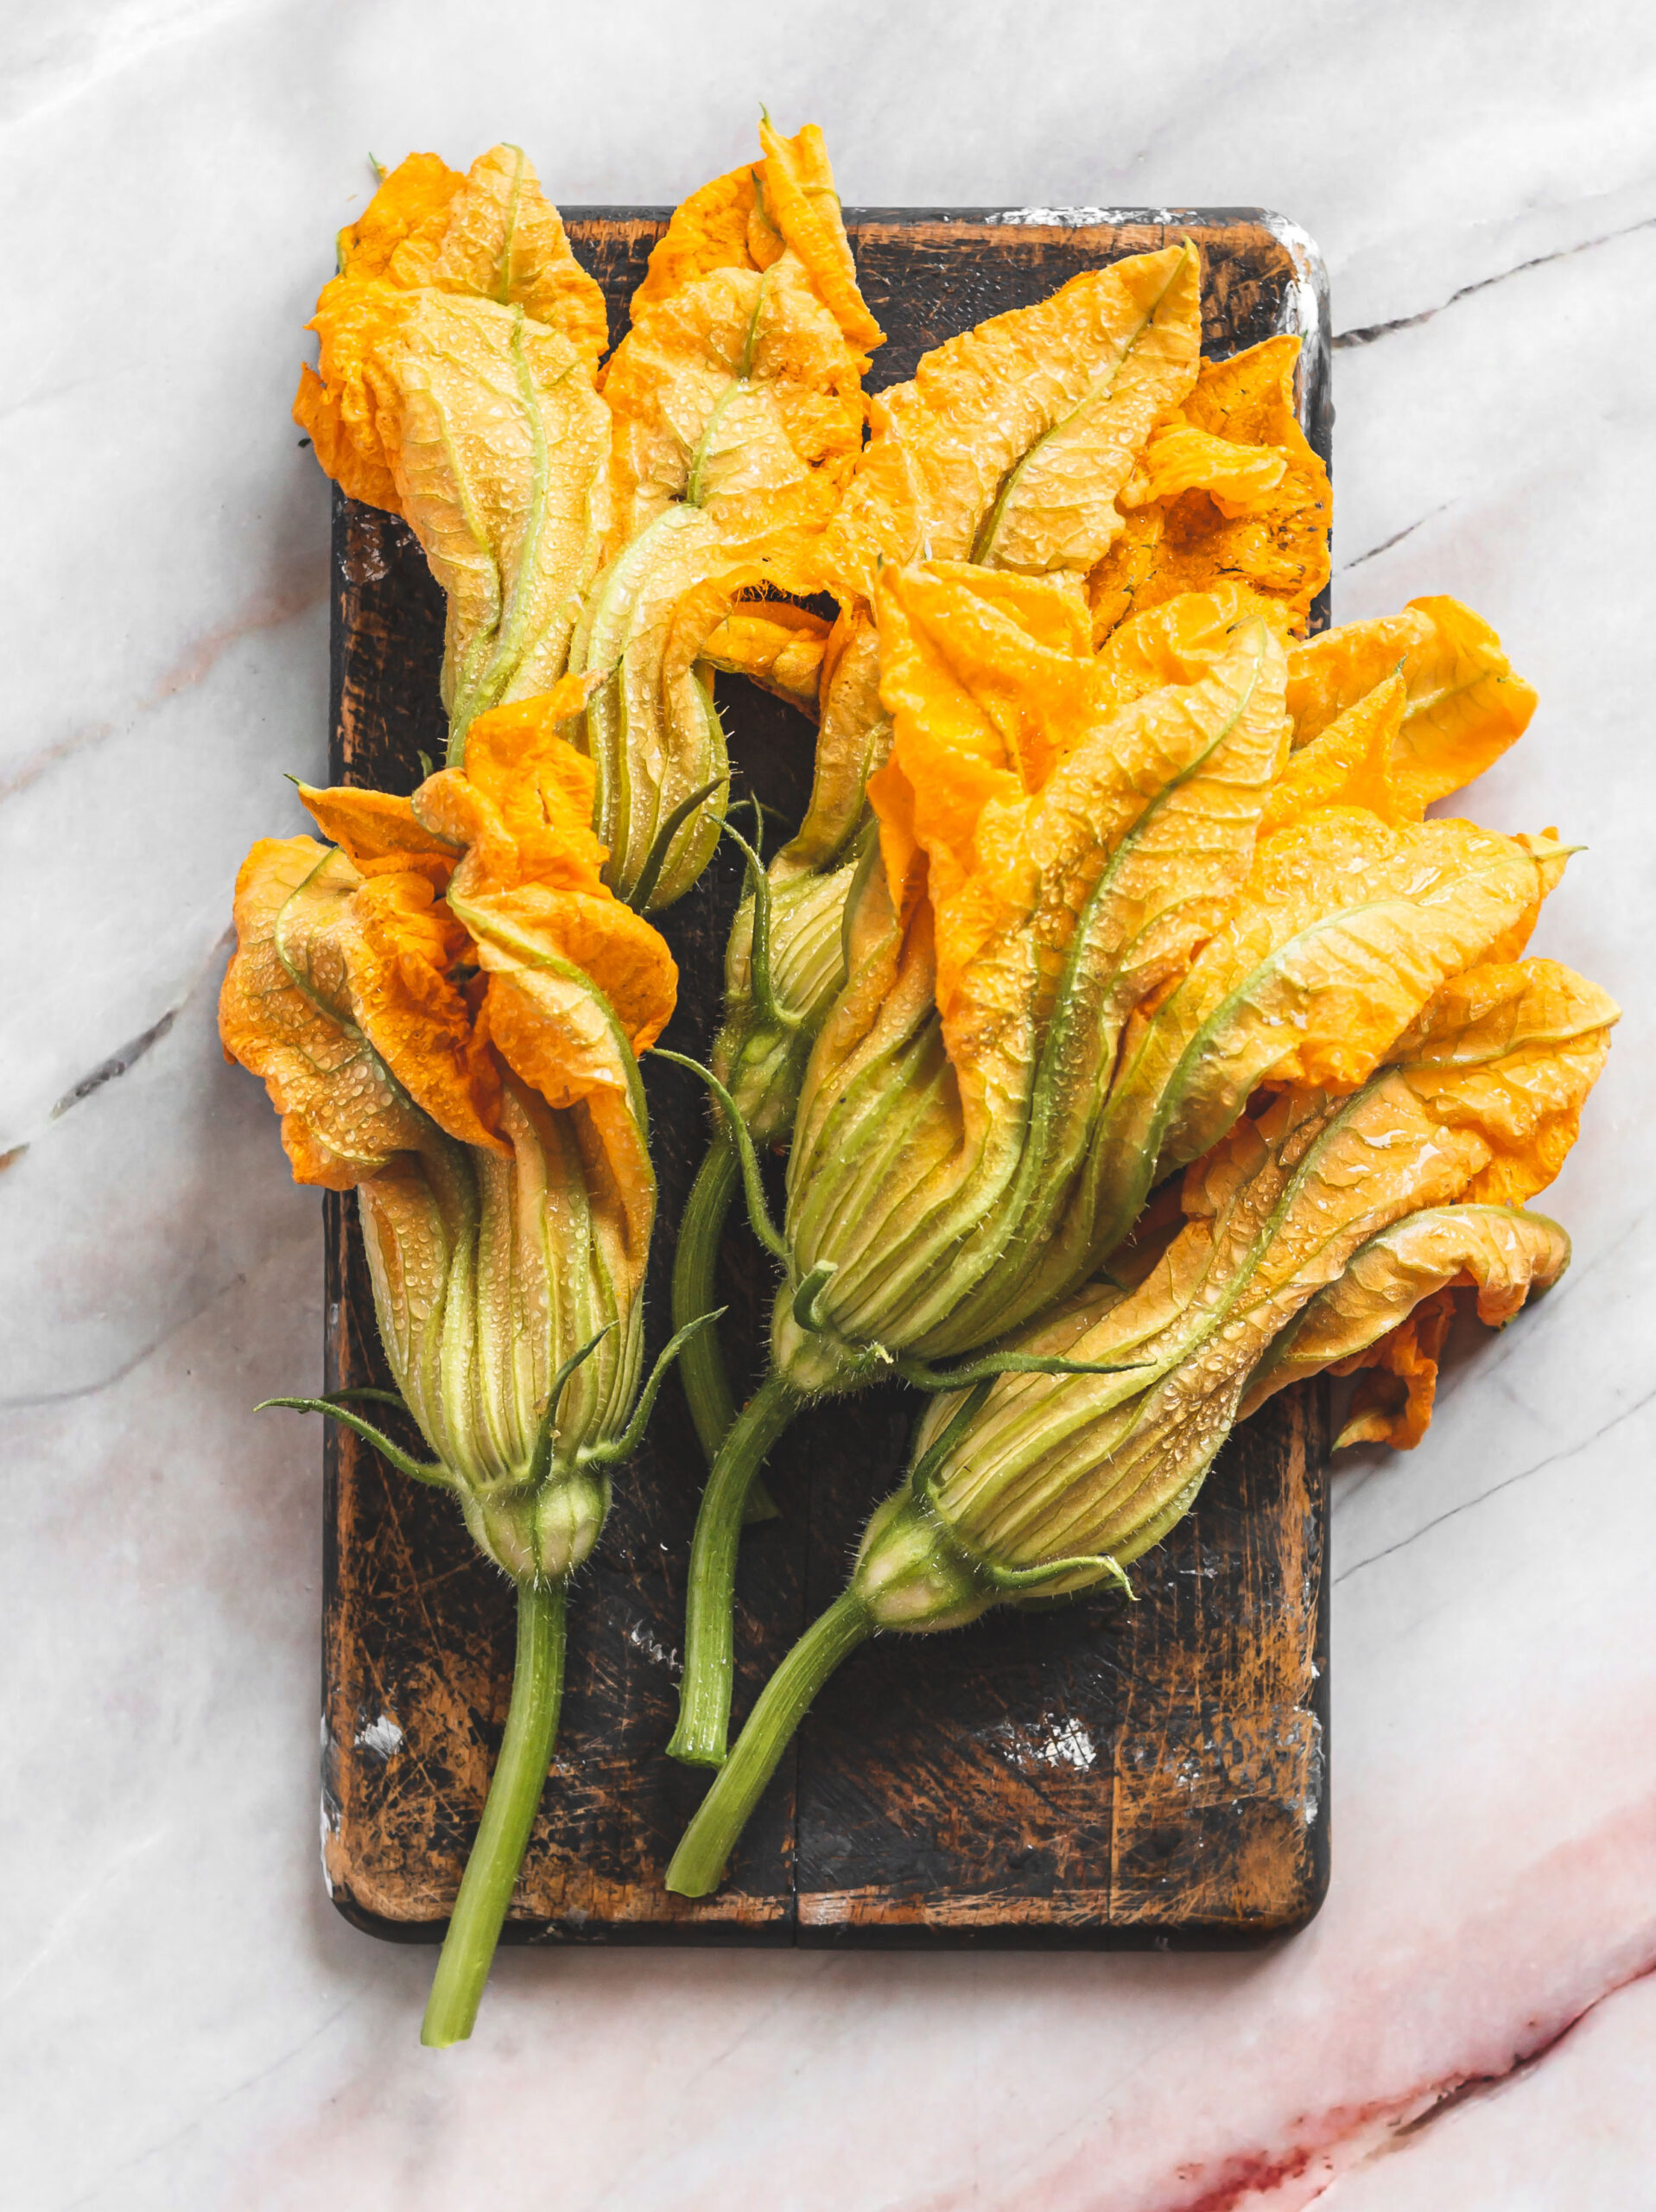 zucchini flowers recipes 